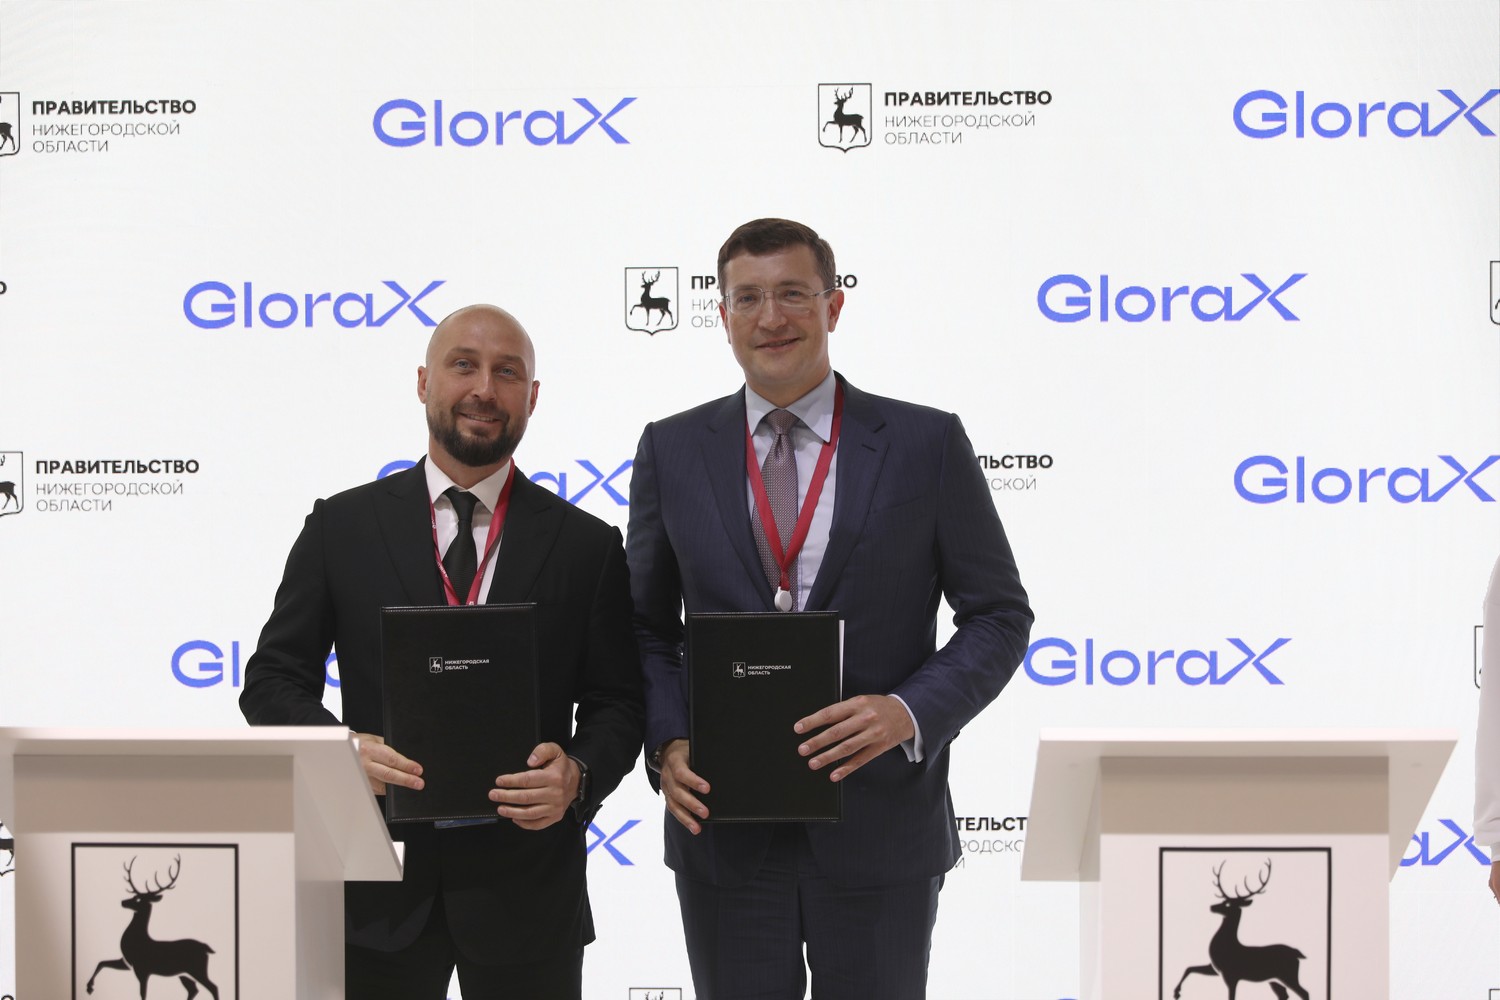 Глеб Никитин и гендиректор ООО «Глоракс» подписали соглашение о сотрудничестве - фото 1